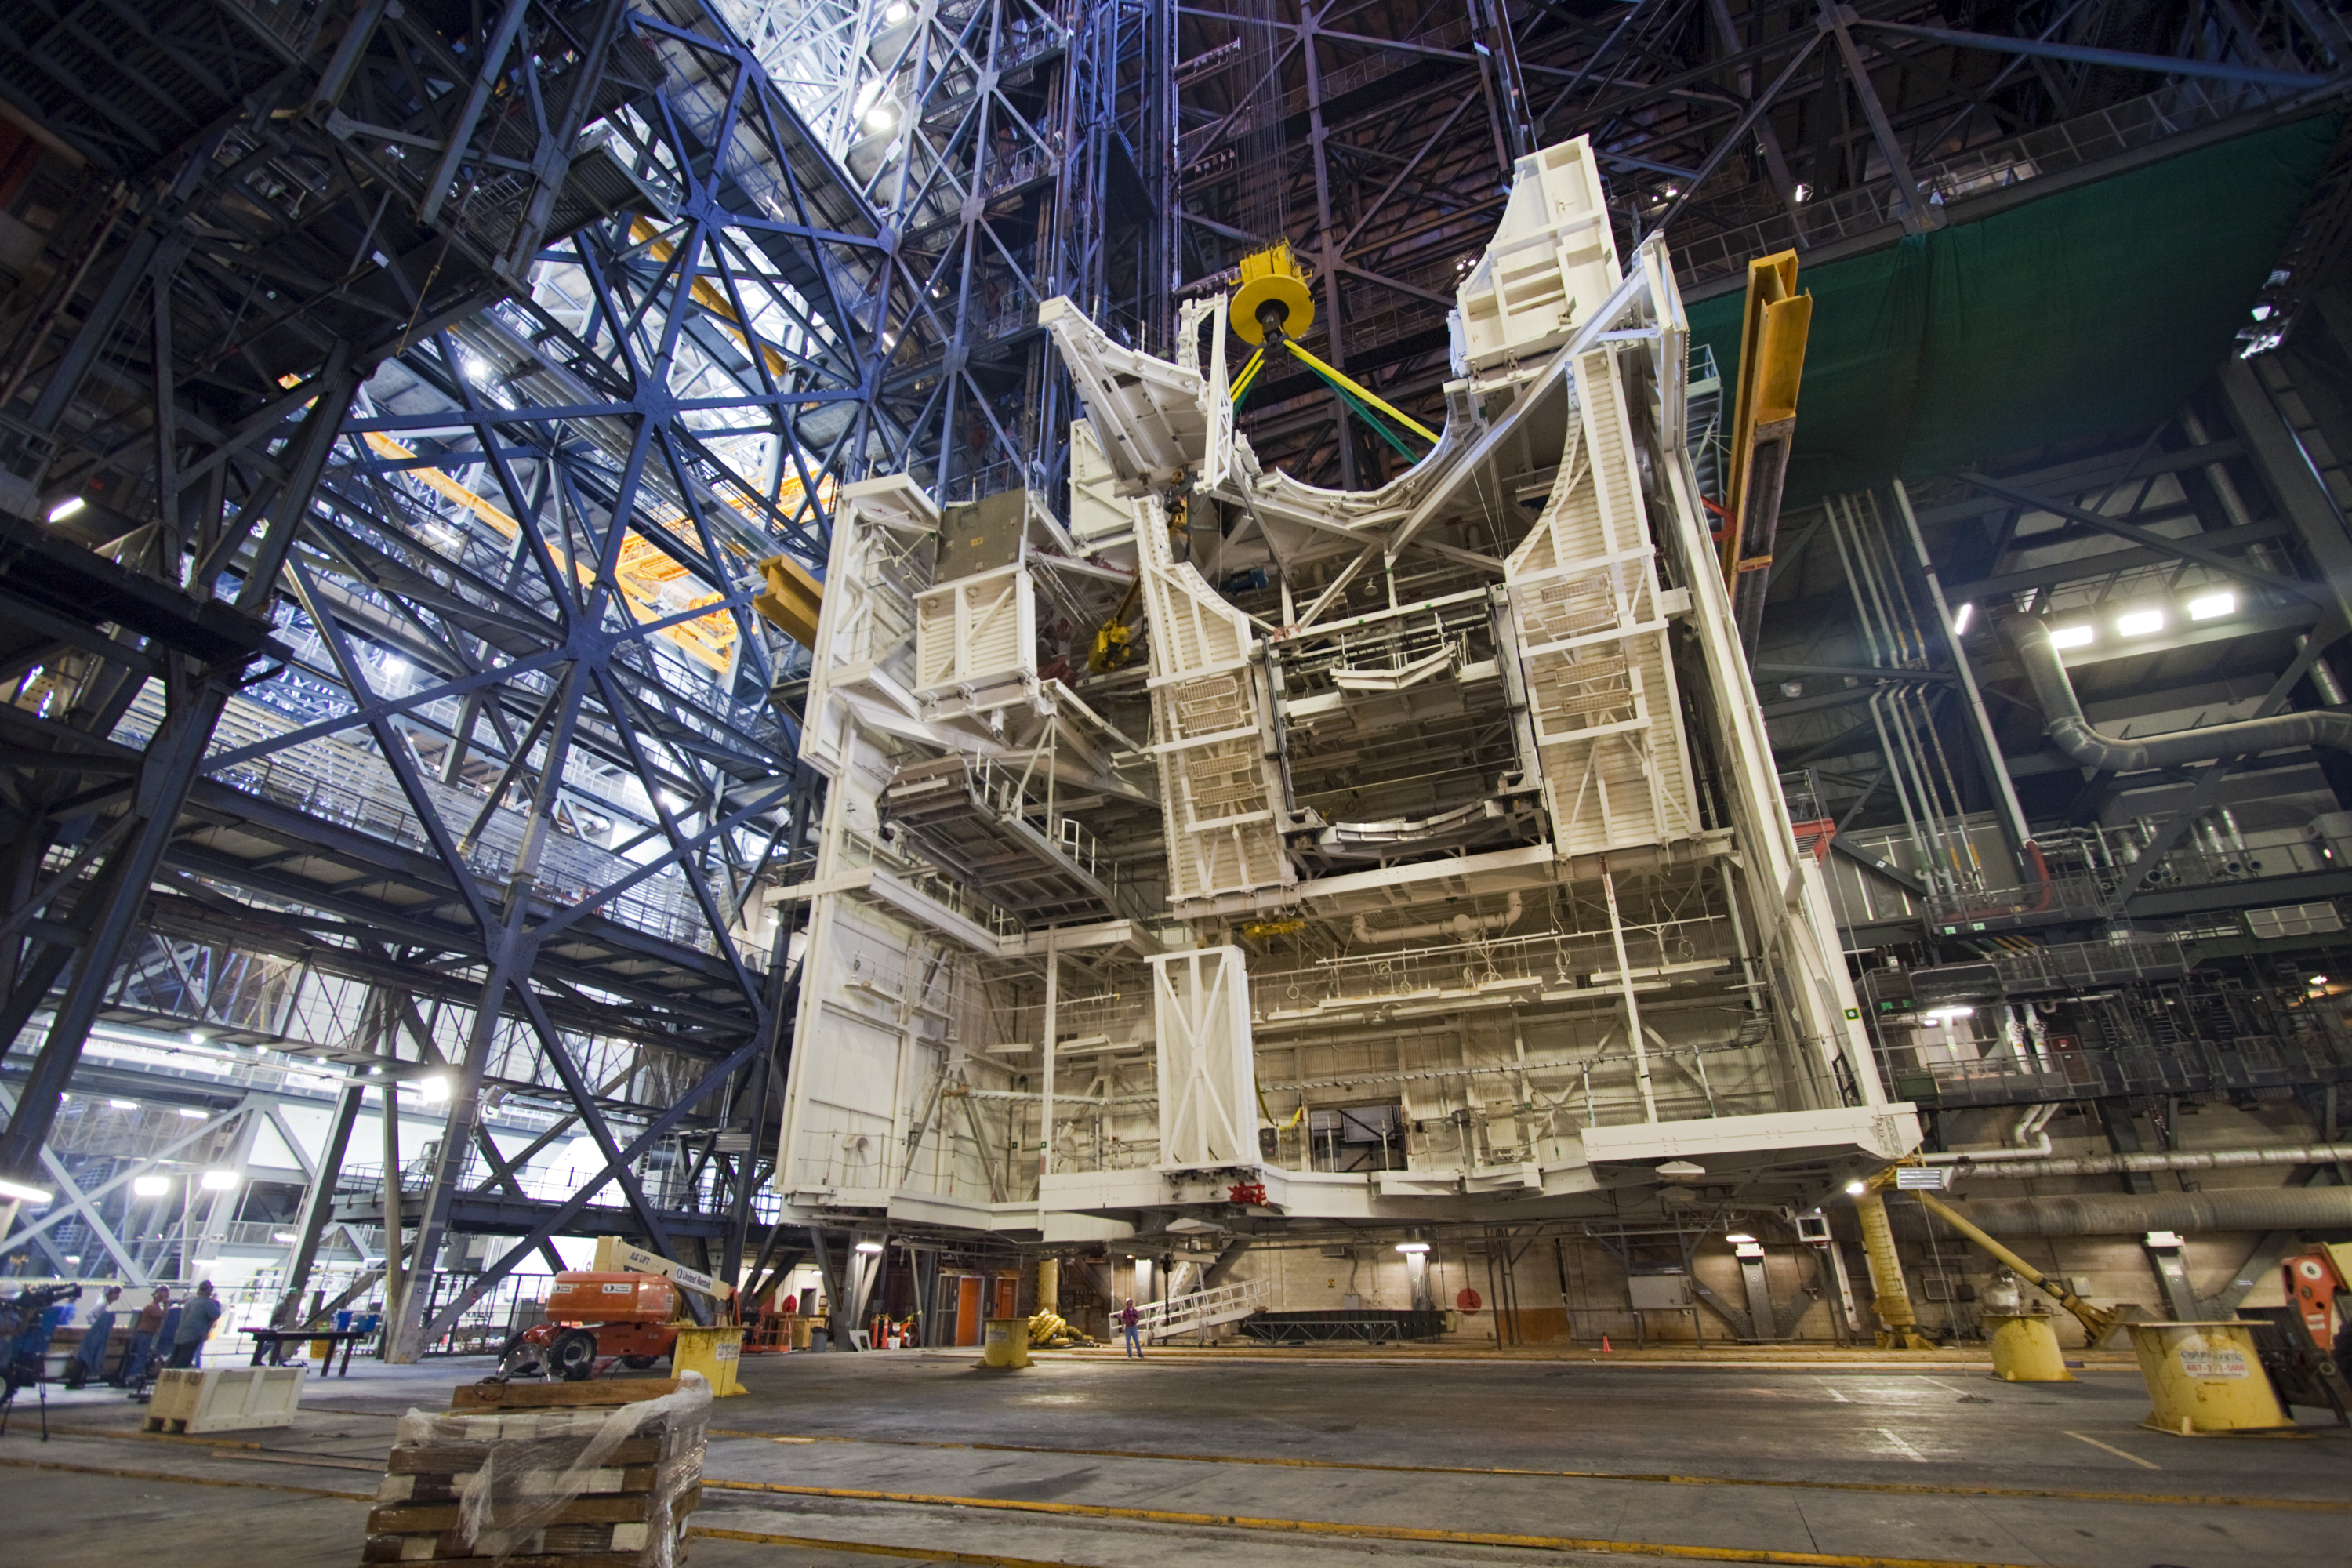 World's Largest Warehouse - NASA Vehicle Assembly Building